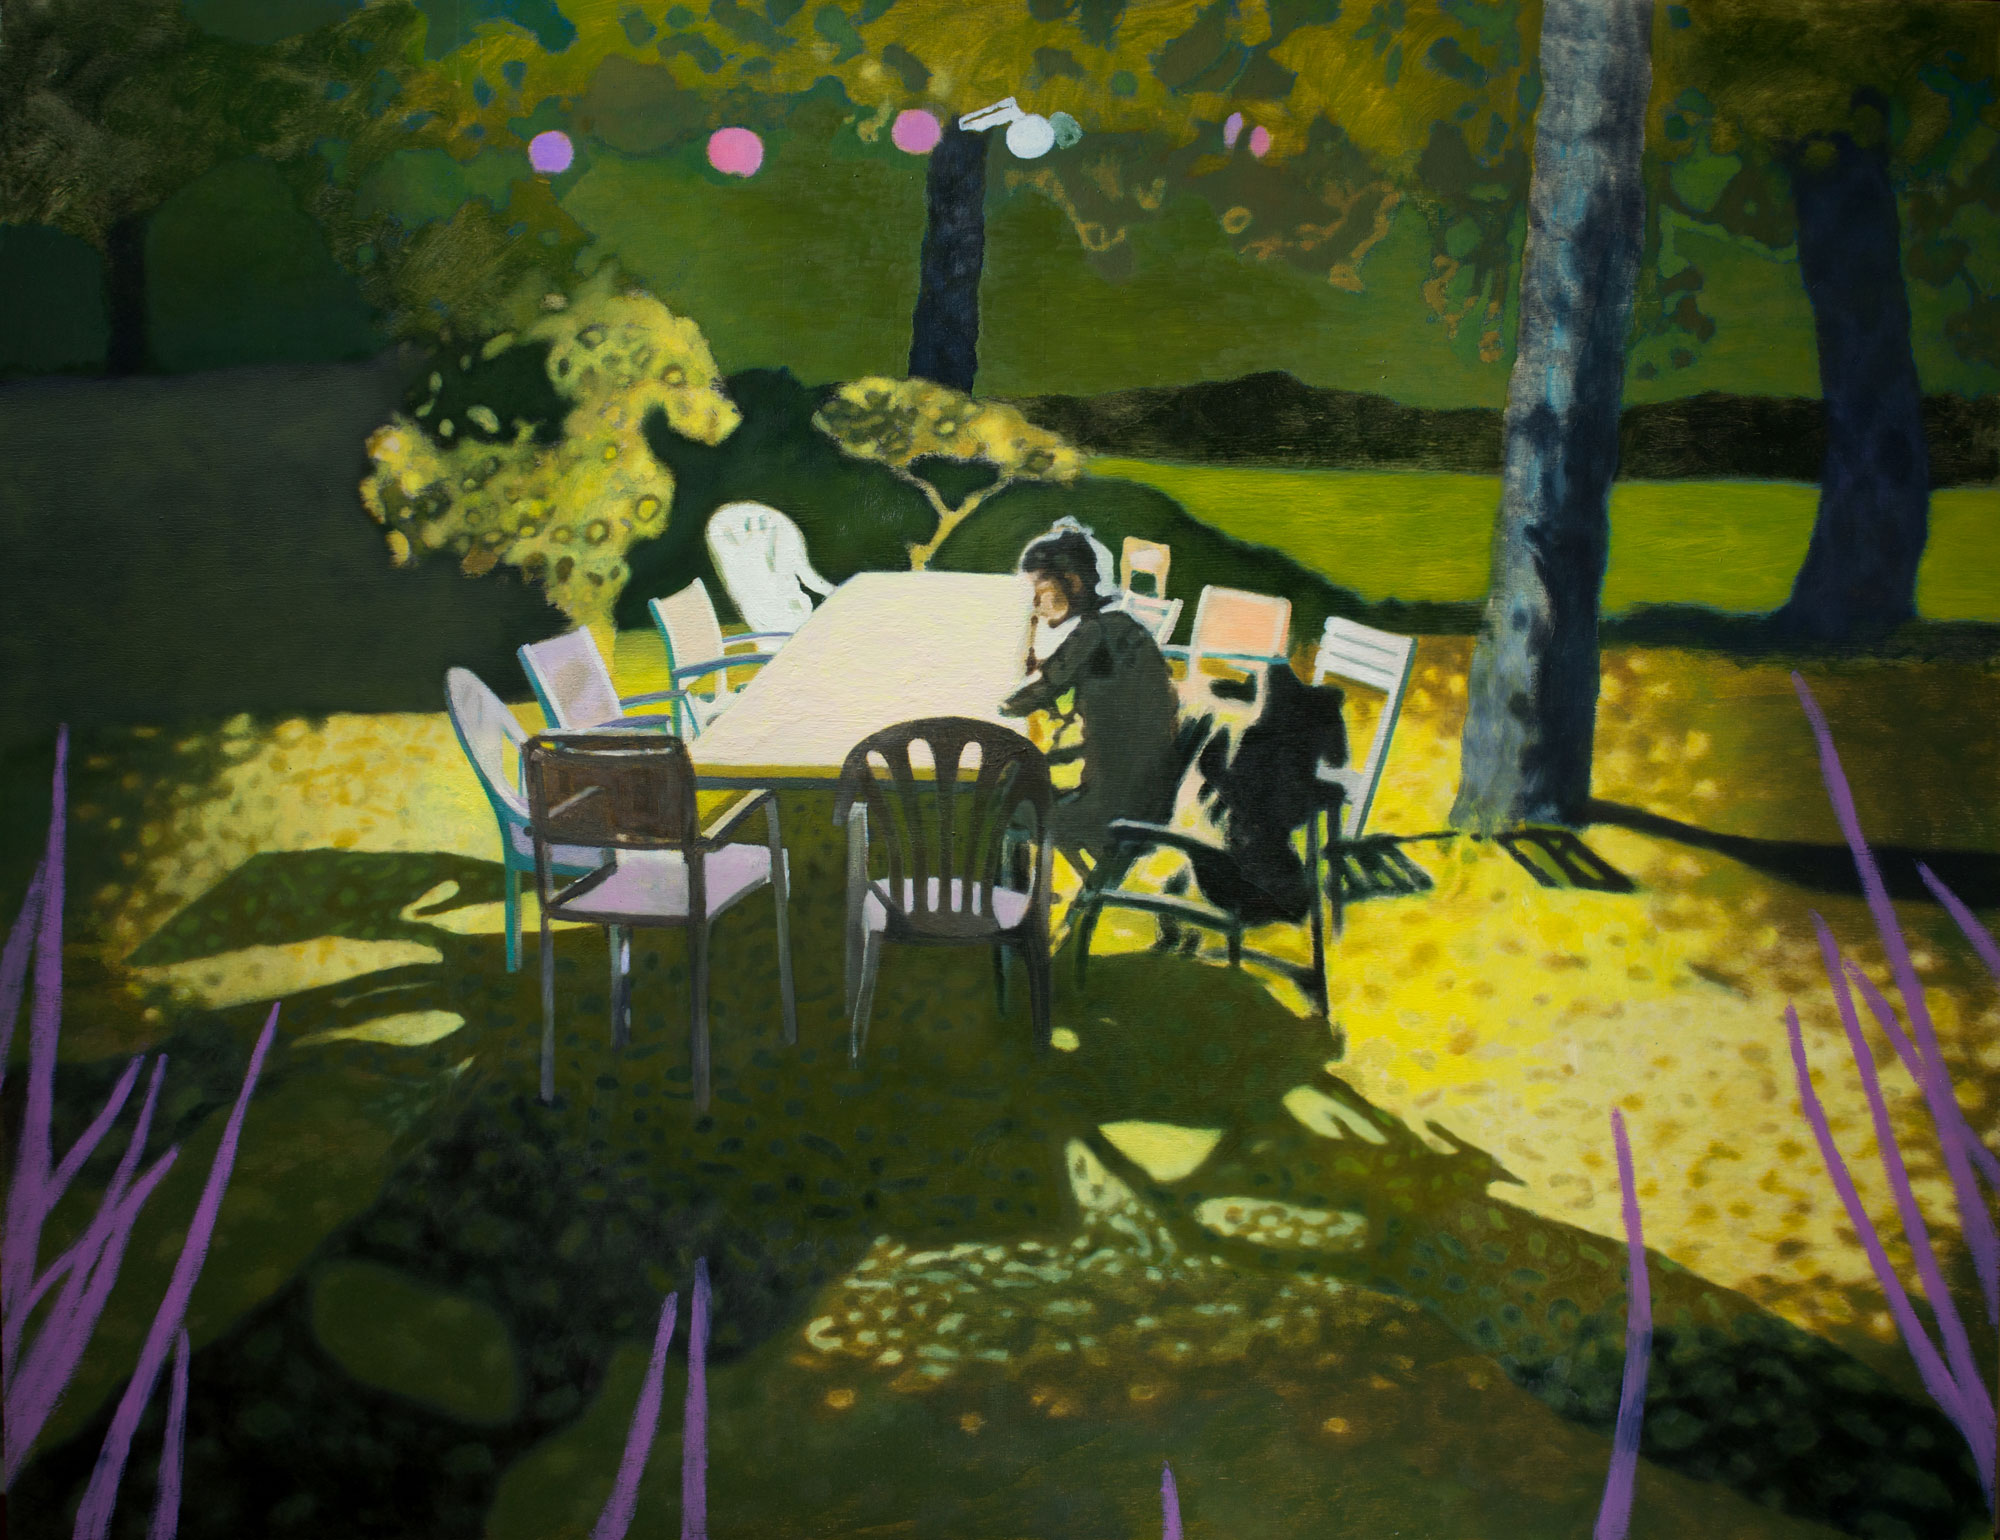 Karolina Orzełek, "Garden party II", 2019, 97 x 73 cm, oil on panel